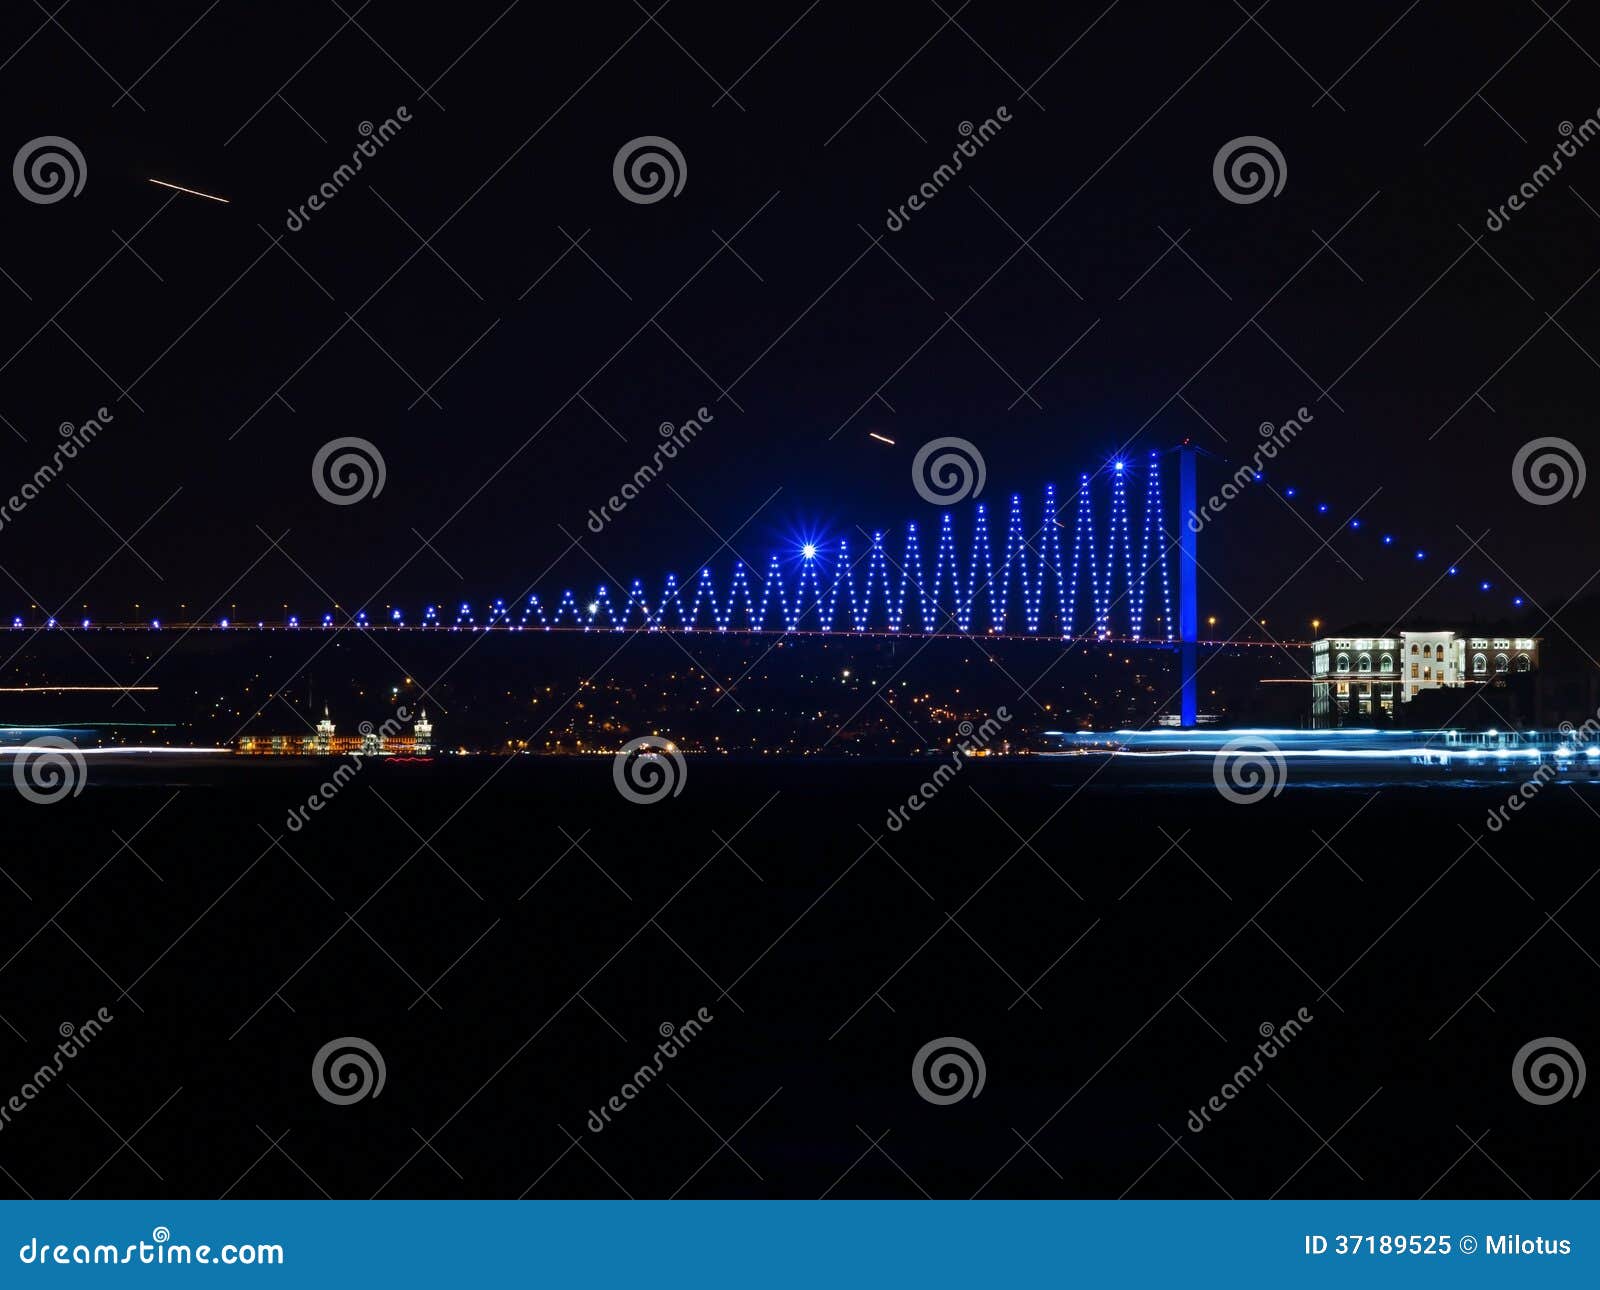 bosphorus bridge at night